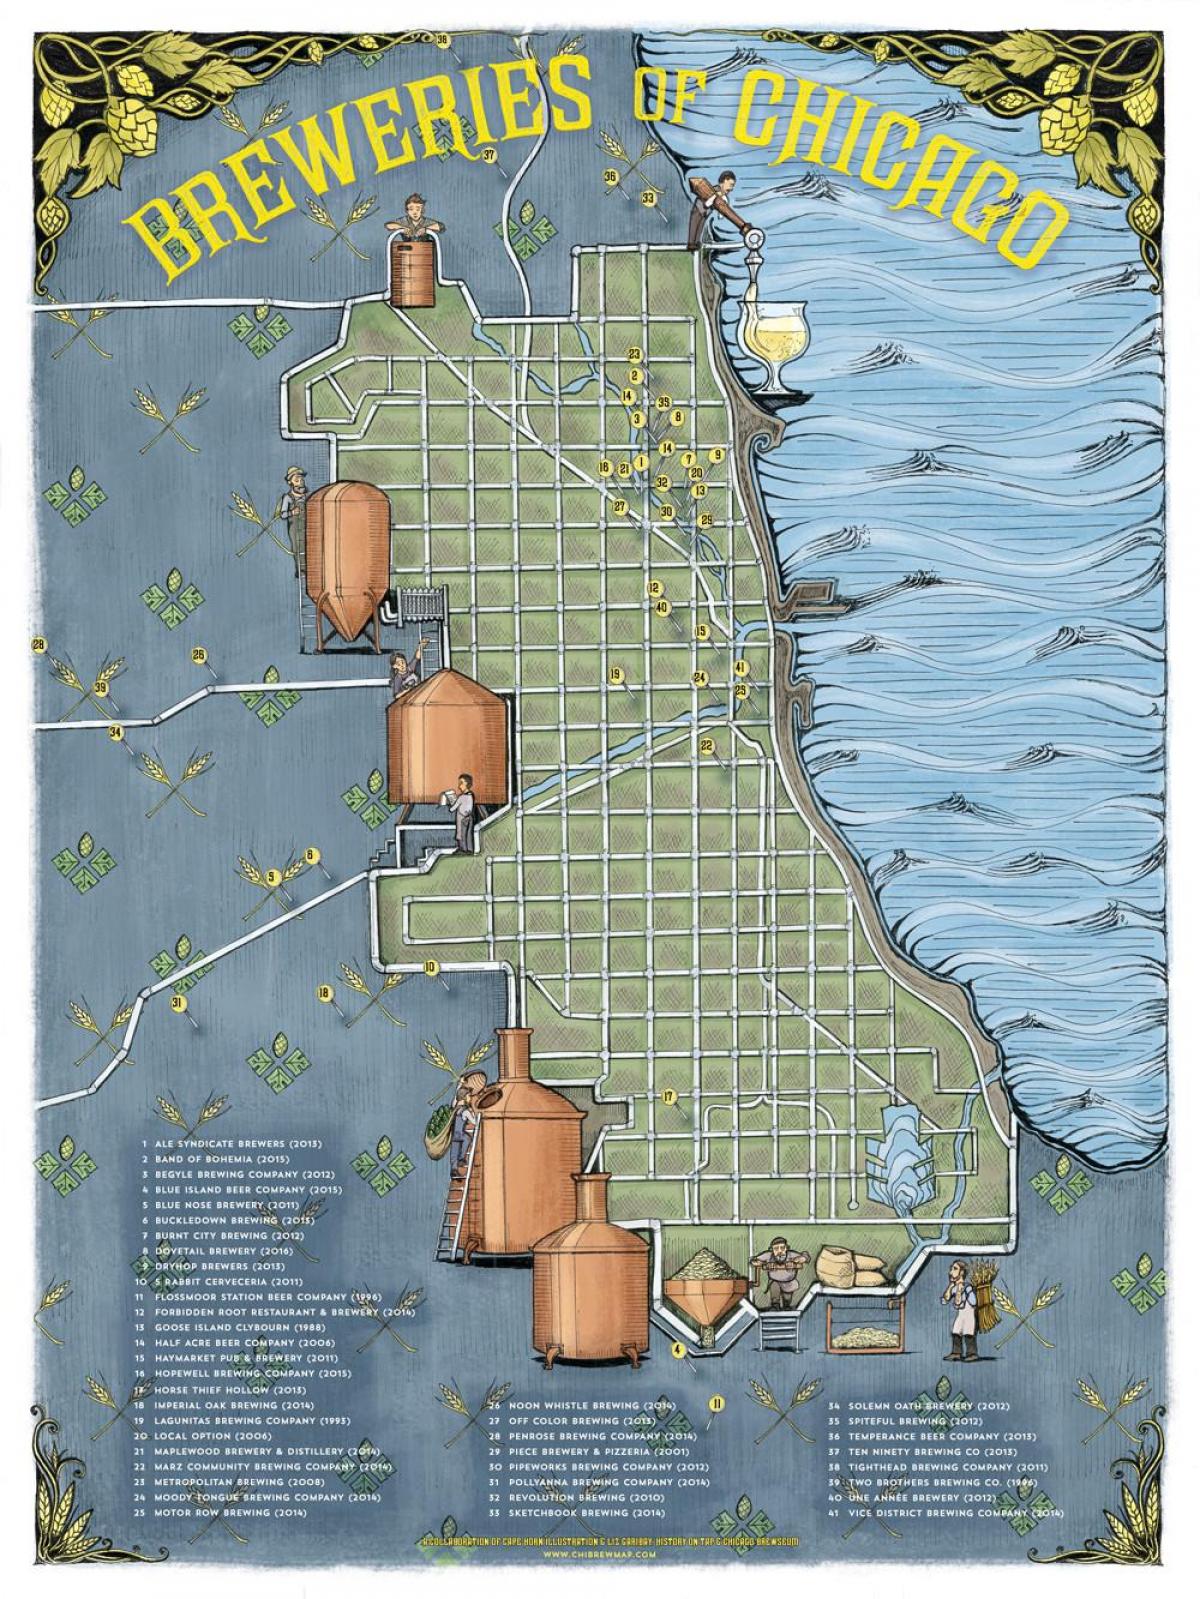 Chicago bière carte